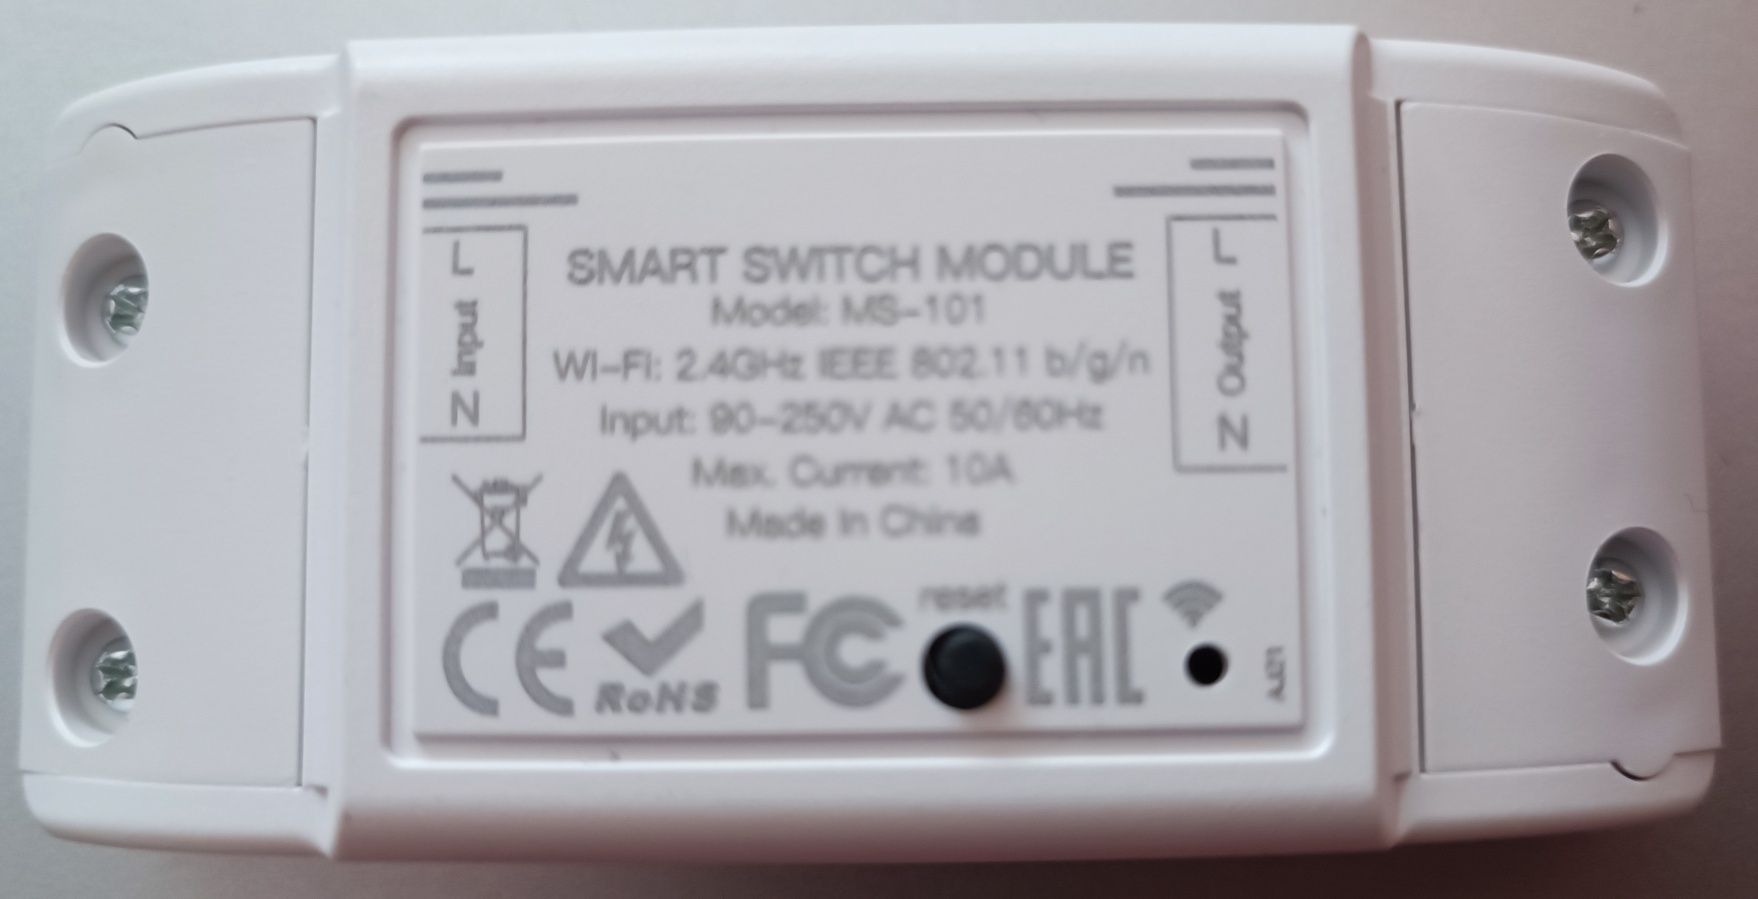 Smart swith mobule wi-fi